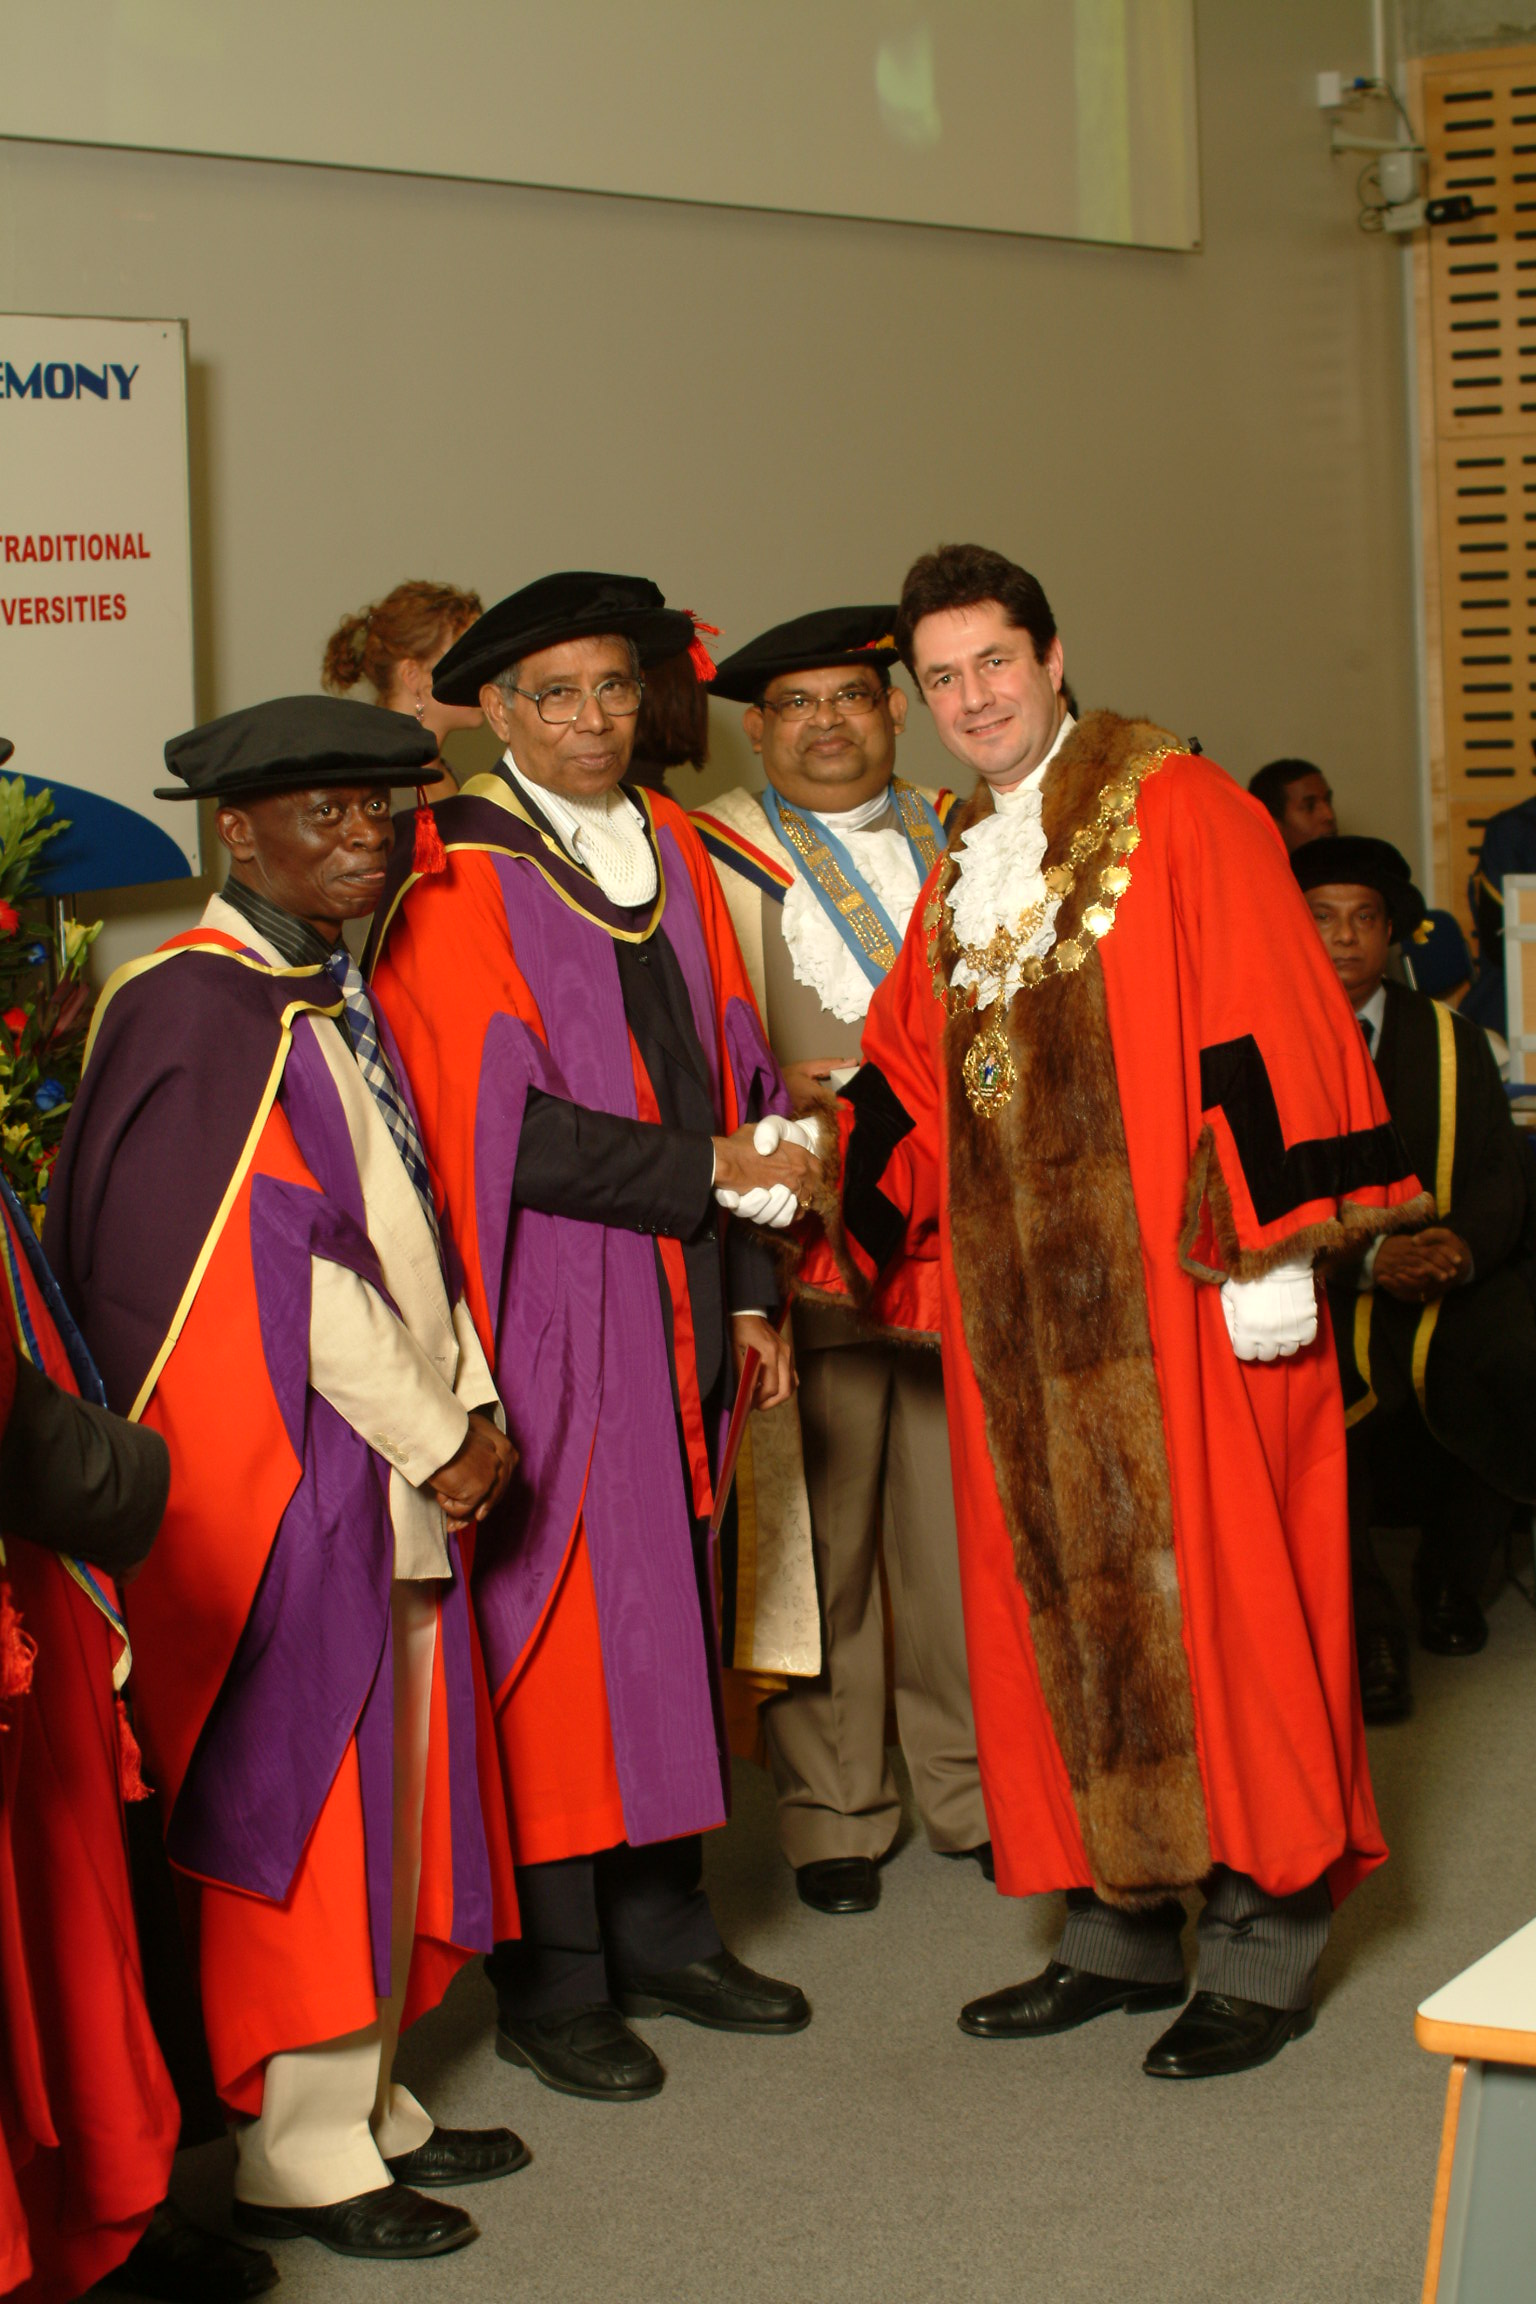 Depty Mayor Westminster Congratulating Hon Doc recipients